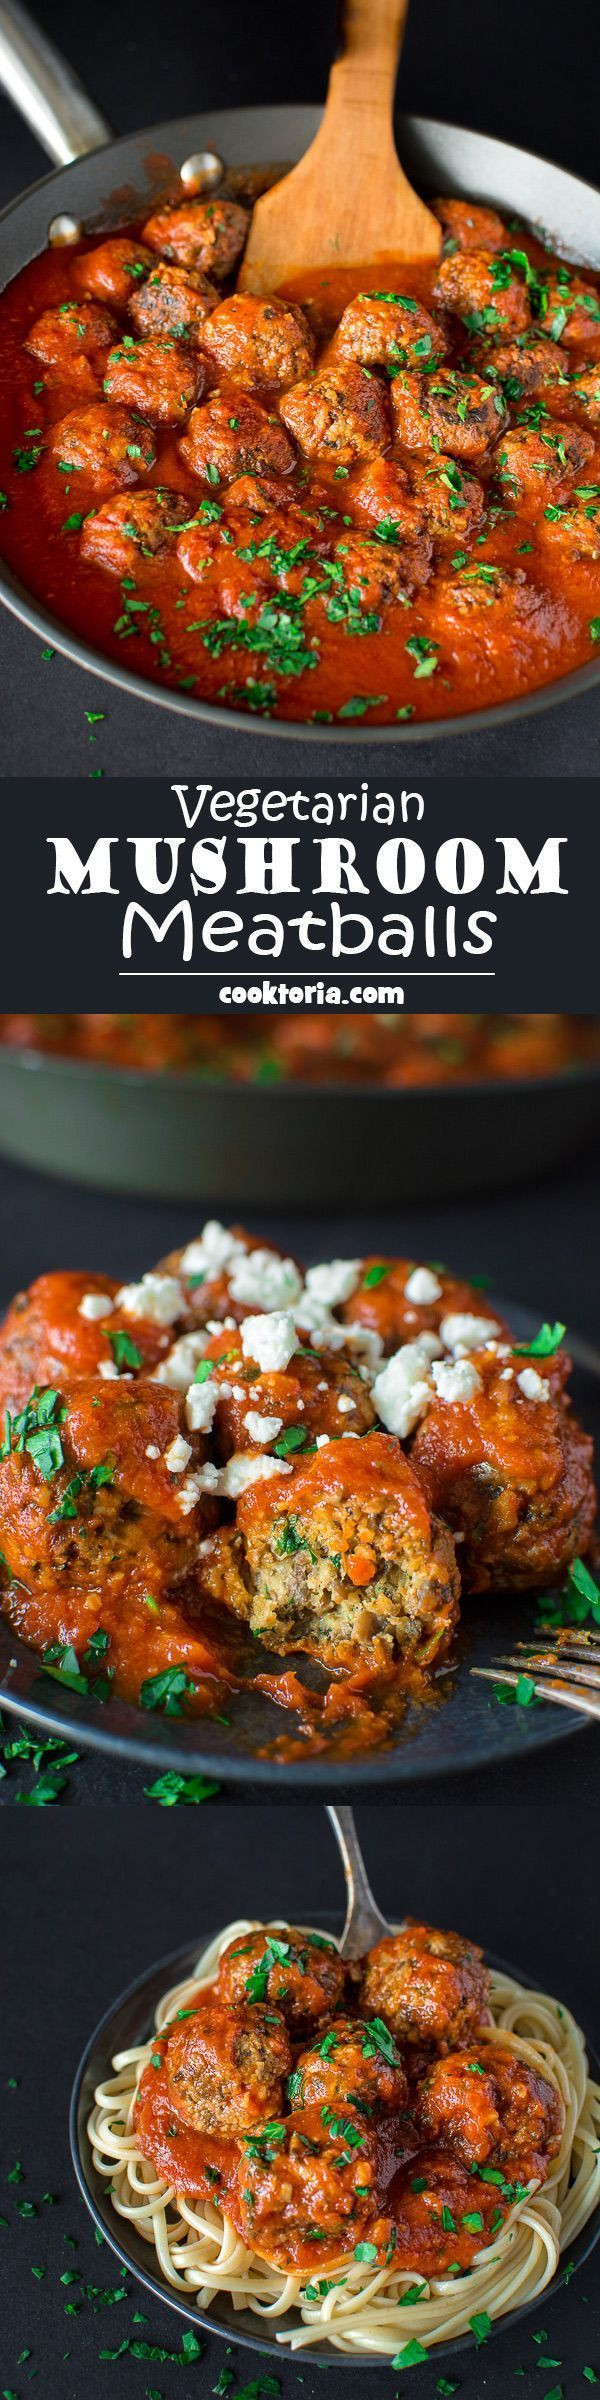 Really Healthy Dinners
 Ve arian mushroom meatballs Recipe